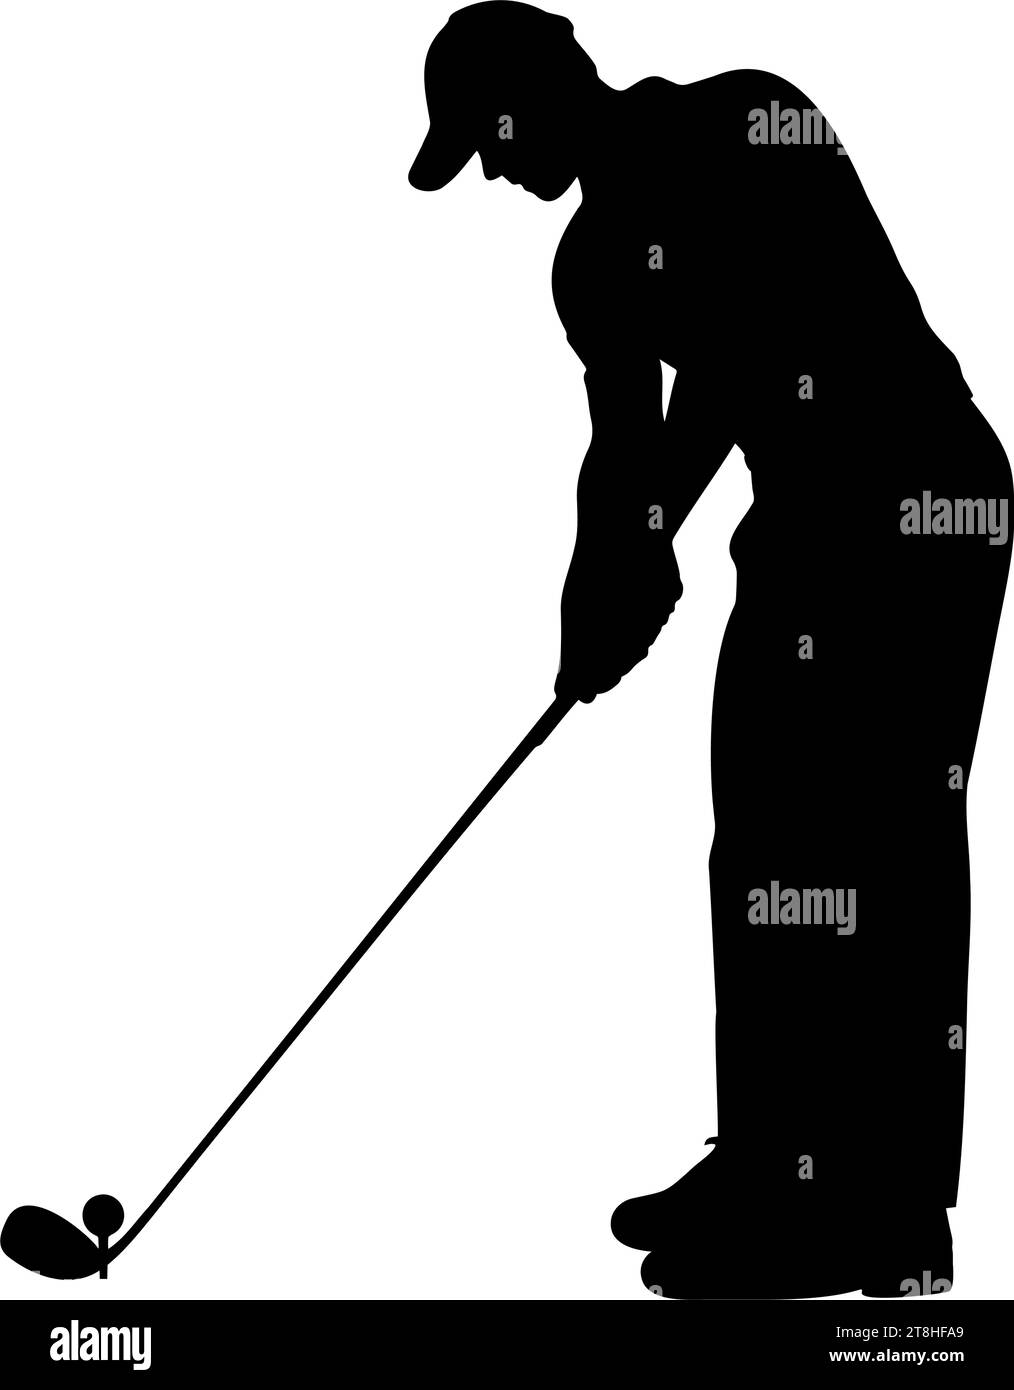 Golf player silhouette. Vector illustration Stock Vector